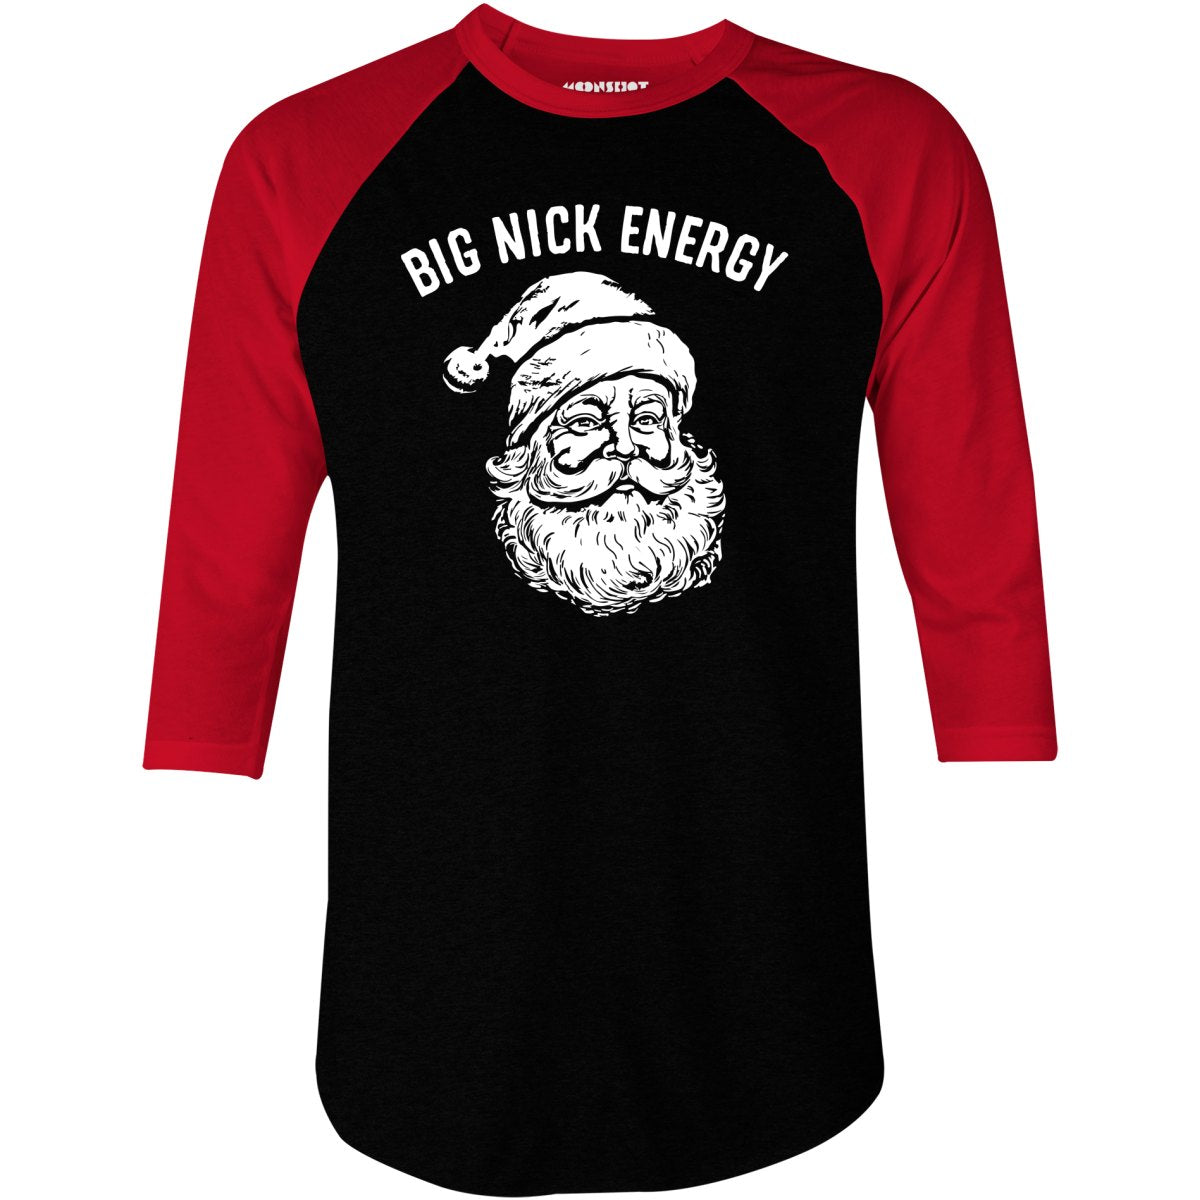 Big Nick Energy - 3/4 Sleeve Raglan T-Shirt